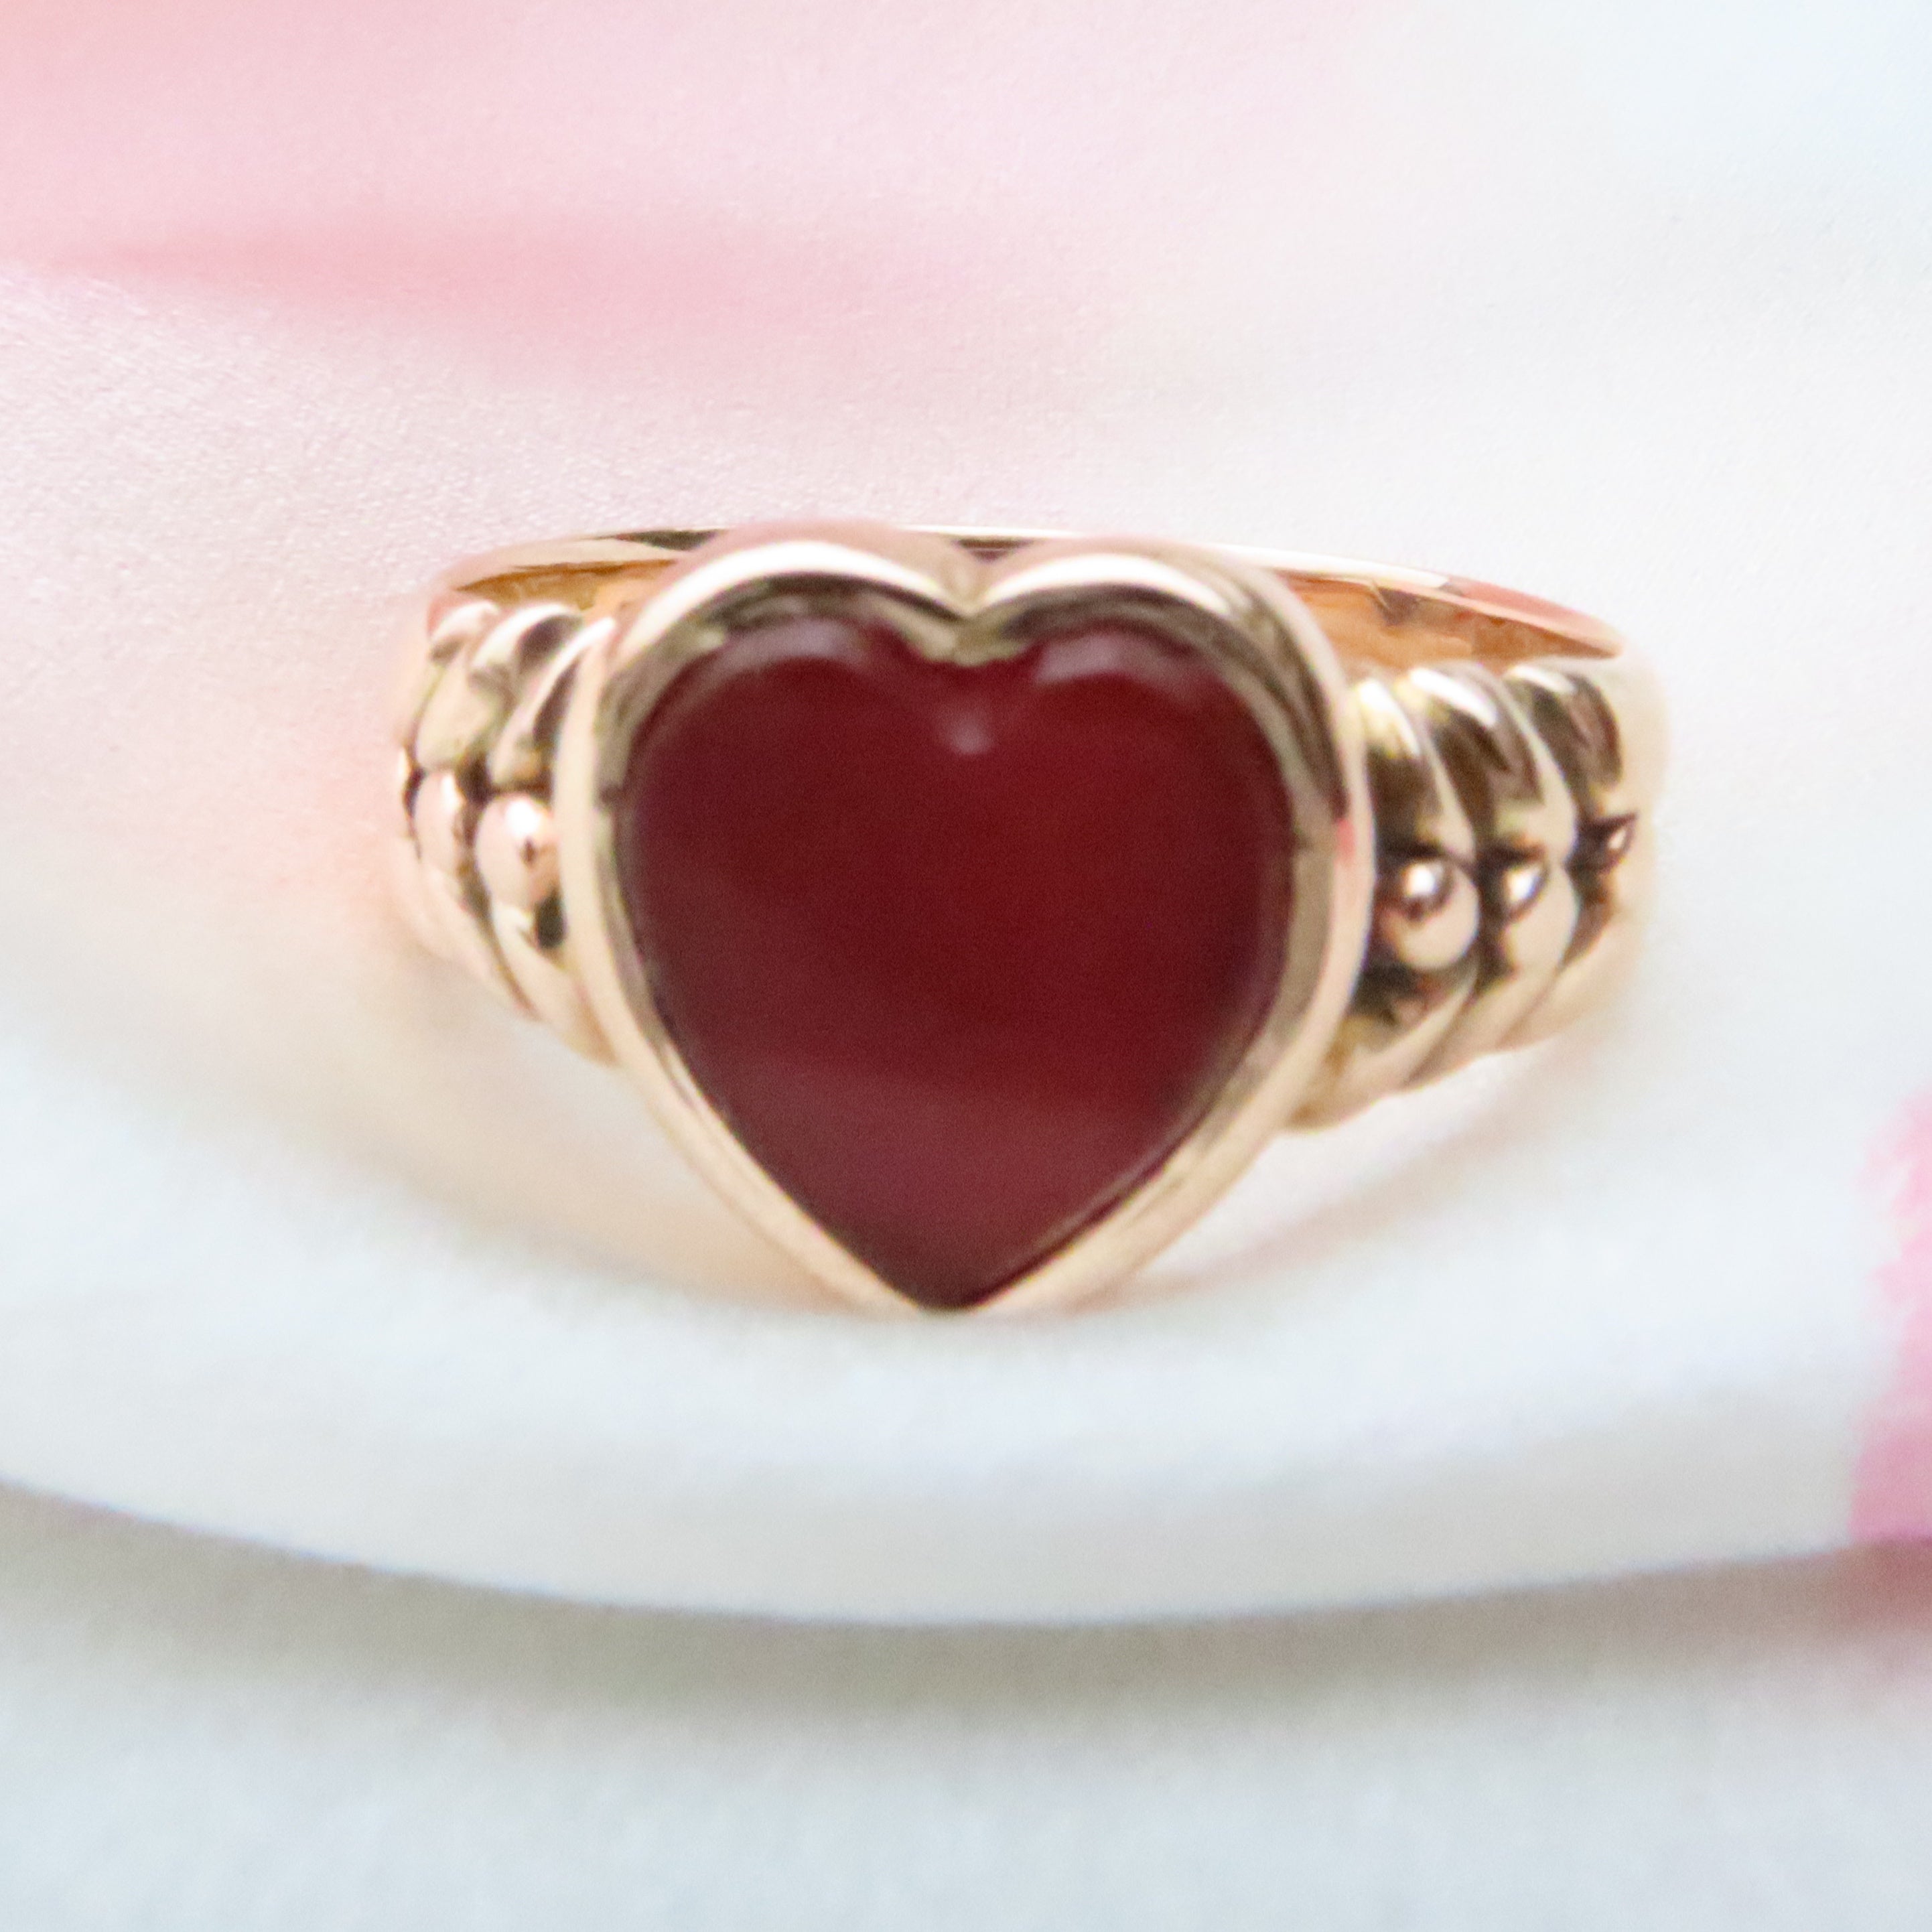 sentimental antique cornelian heart keeper ring 1900 edward vaughton